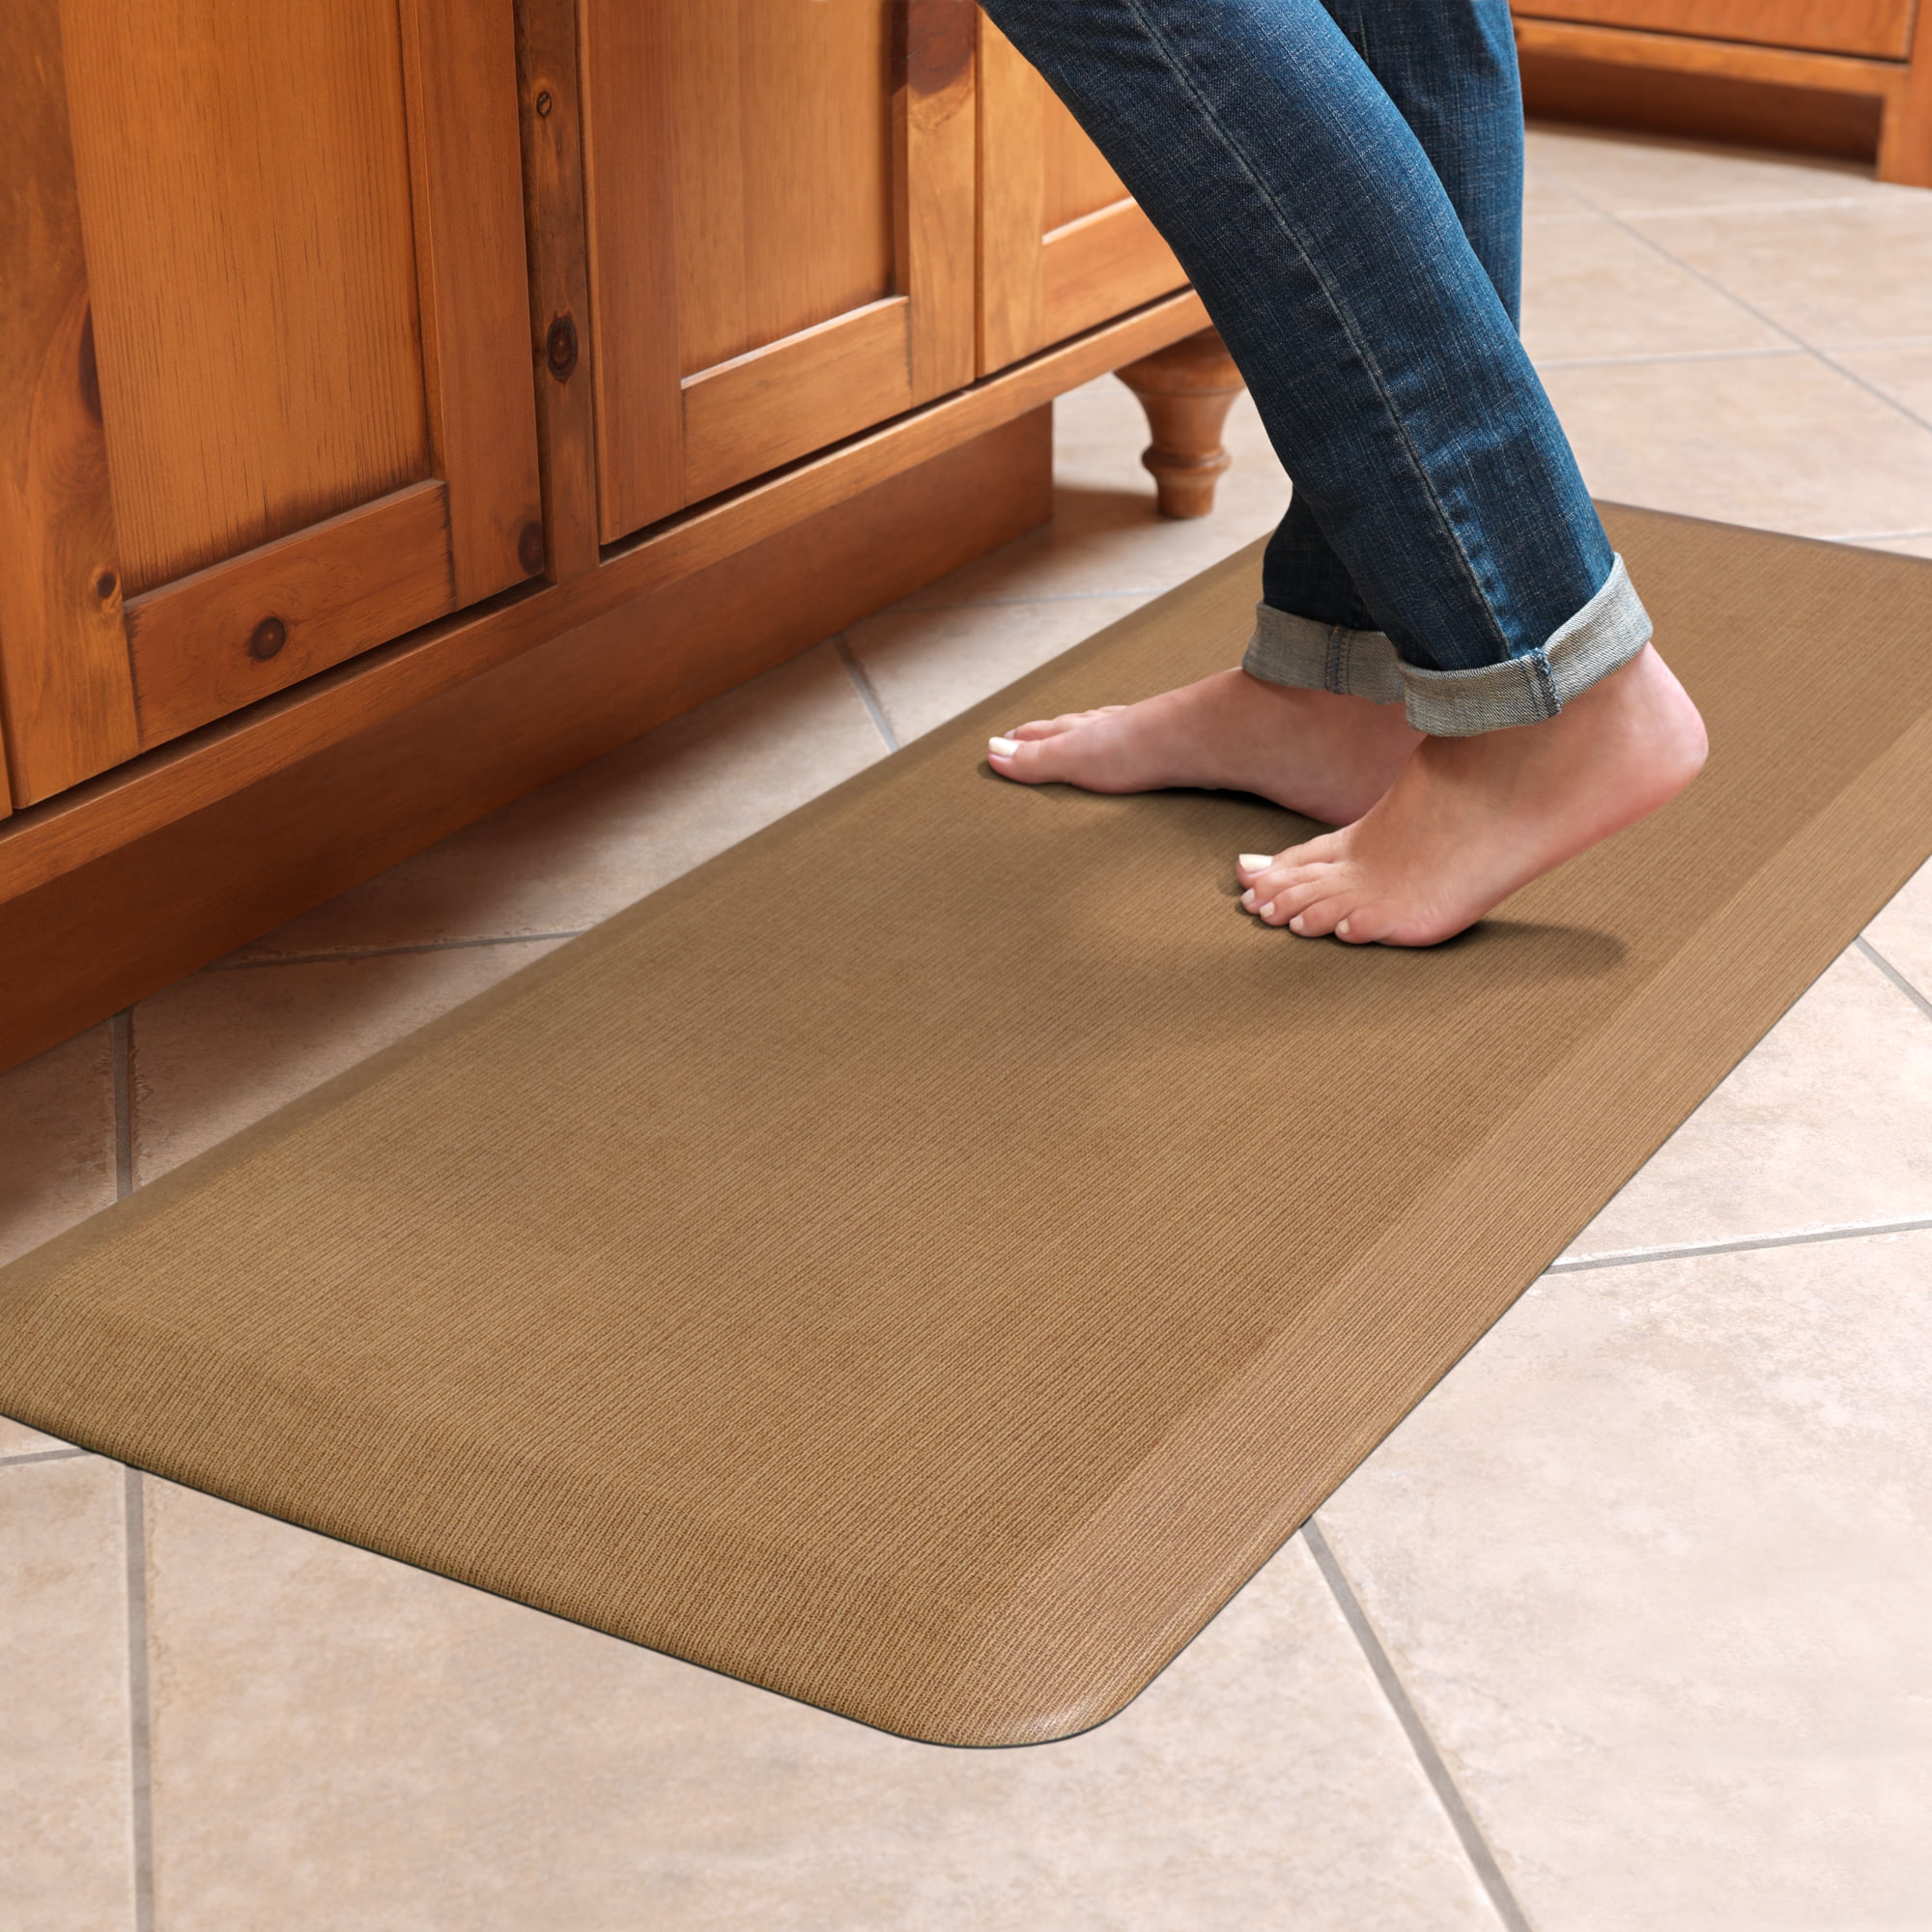 NewLife by GelPro Anti-Fatigue Designer Comfort Kitchen Floor Mat 20"x48” Lea... 